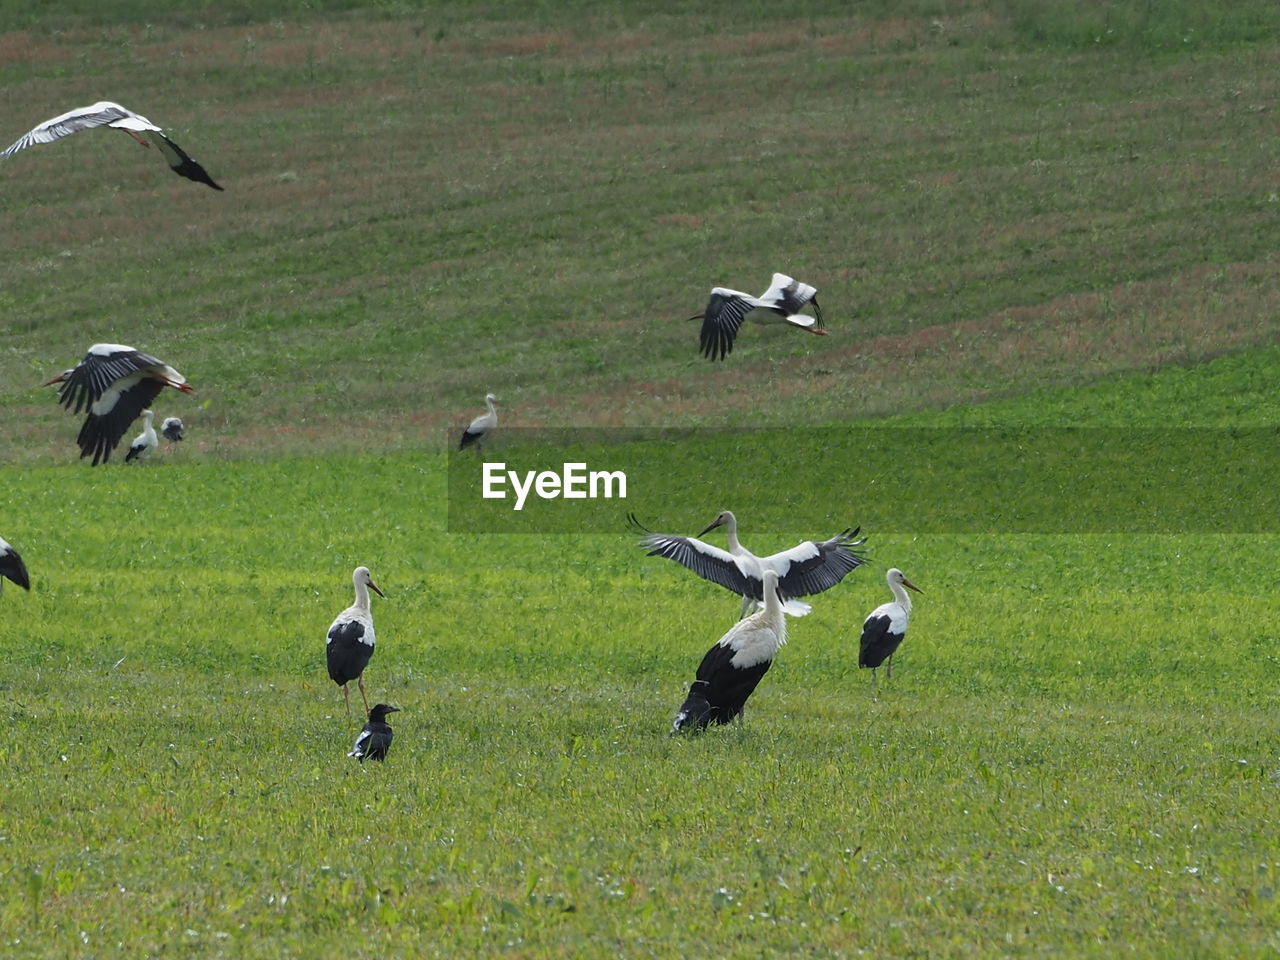 Flock of storks on grassy field. 